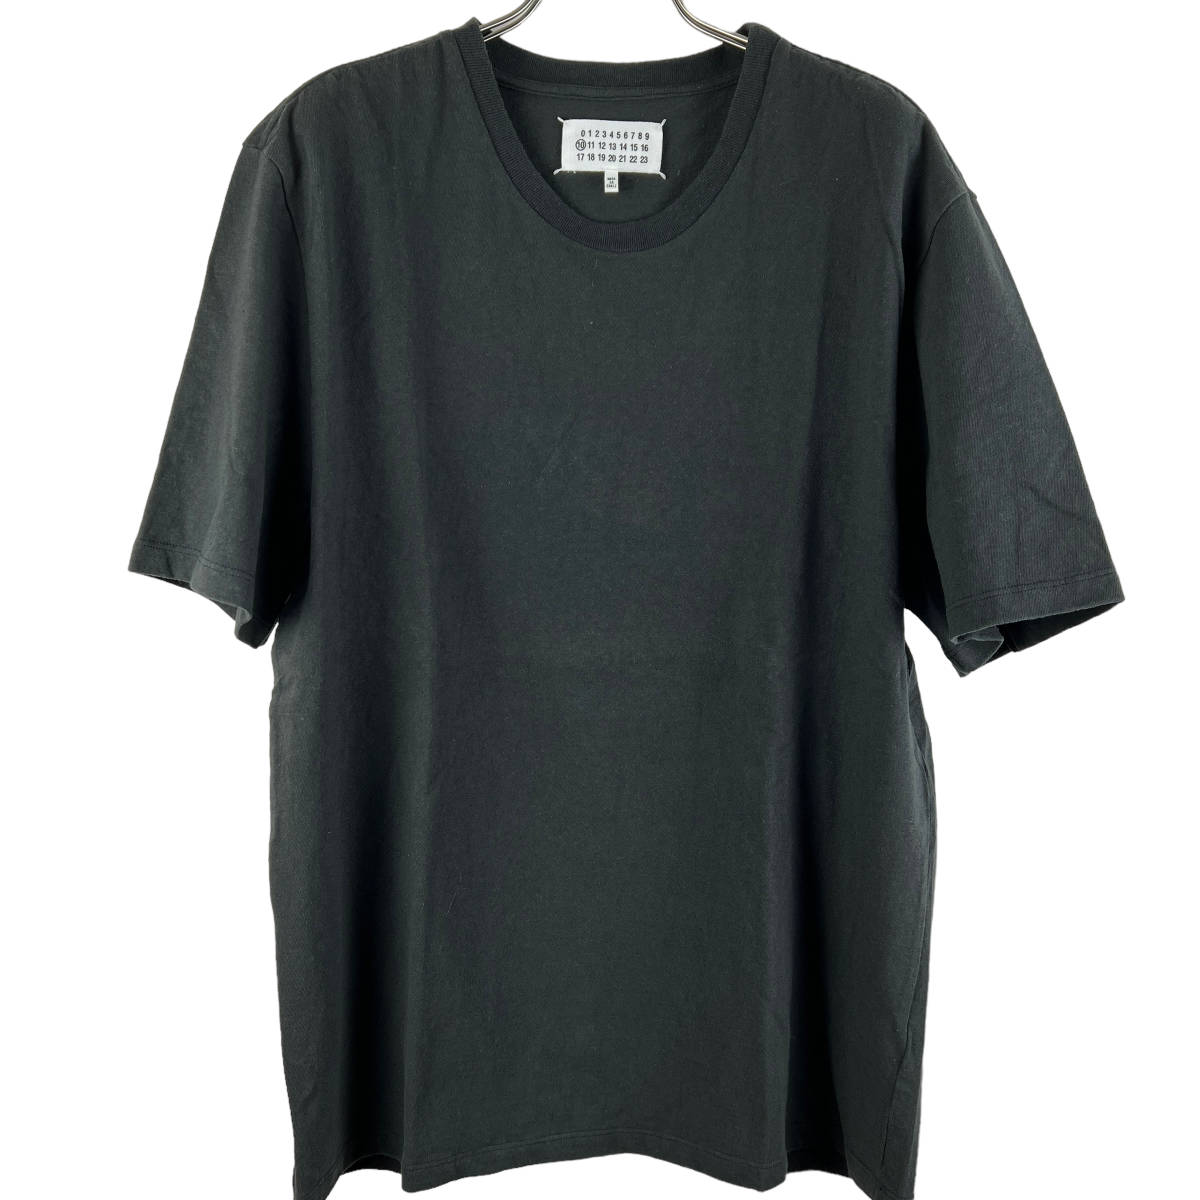 Maison Margiela (メゾン マルジェラ) REPLICA Reproduction Of Found T Shirt (black)